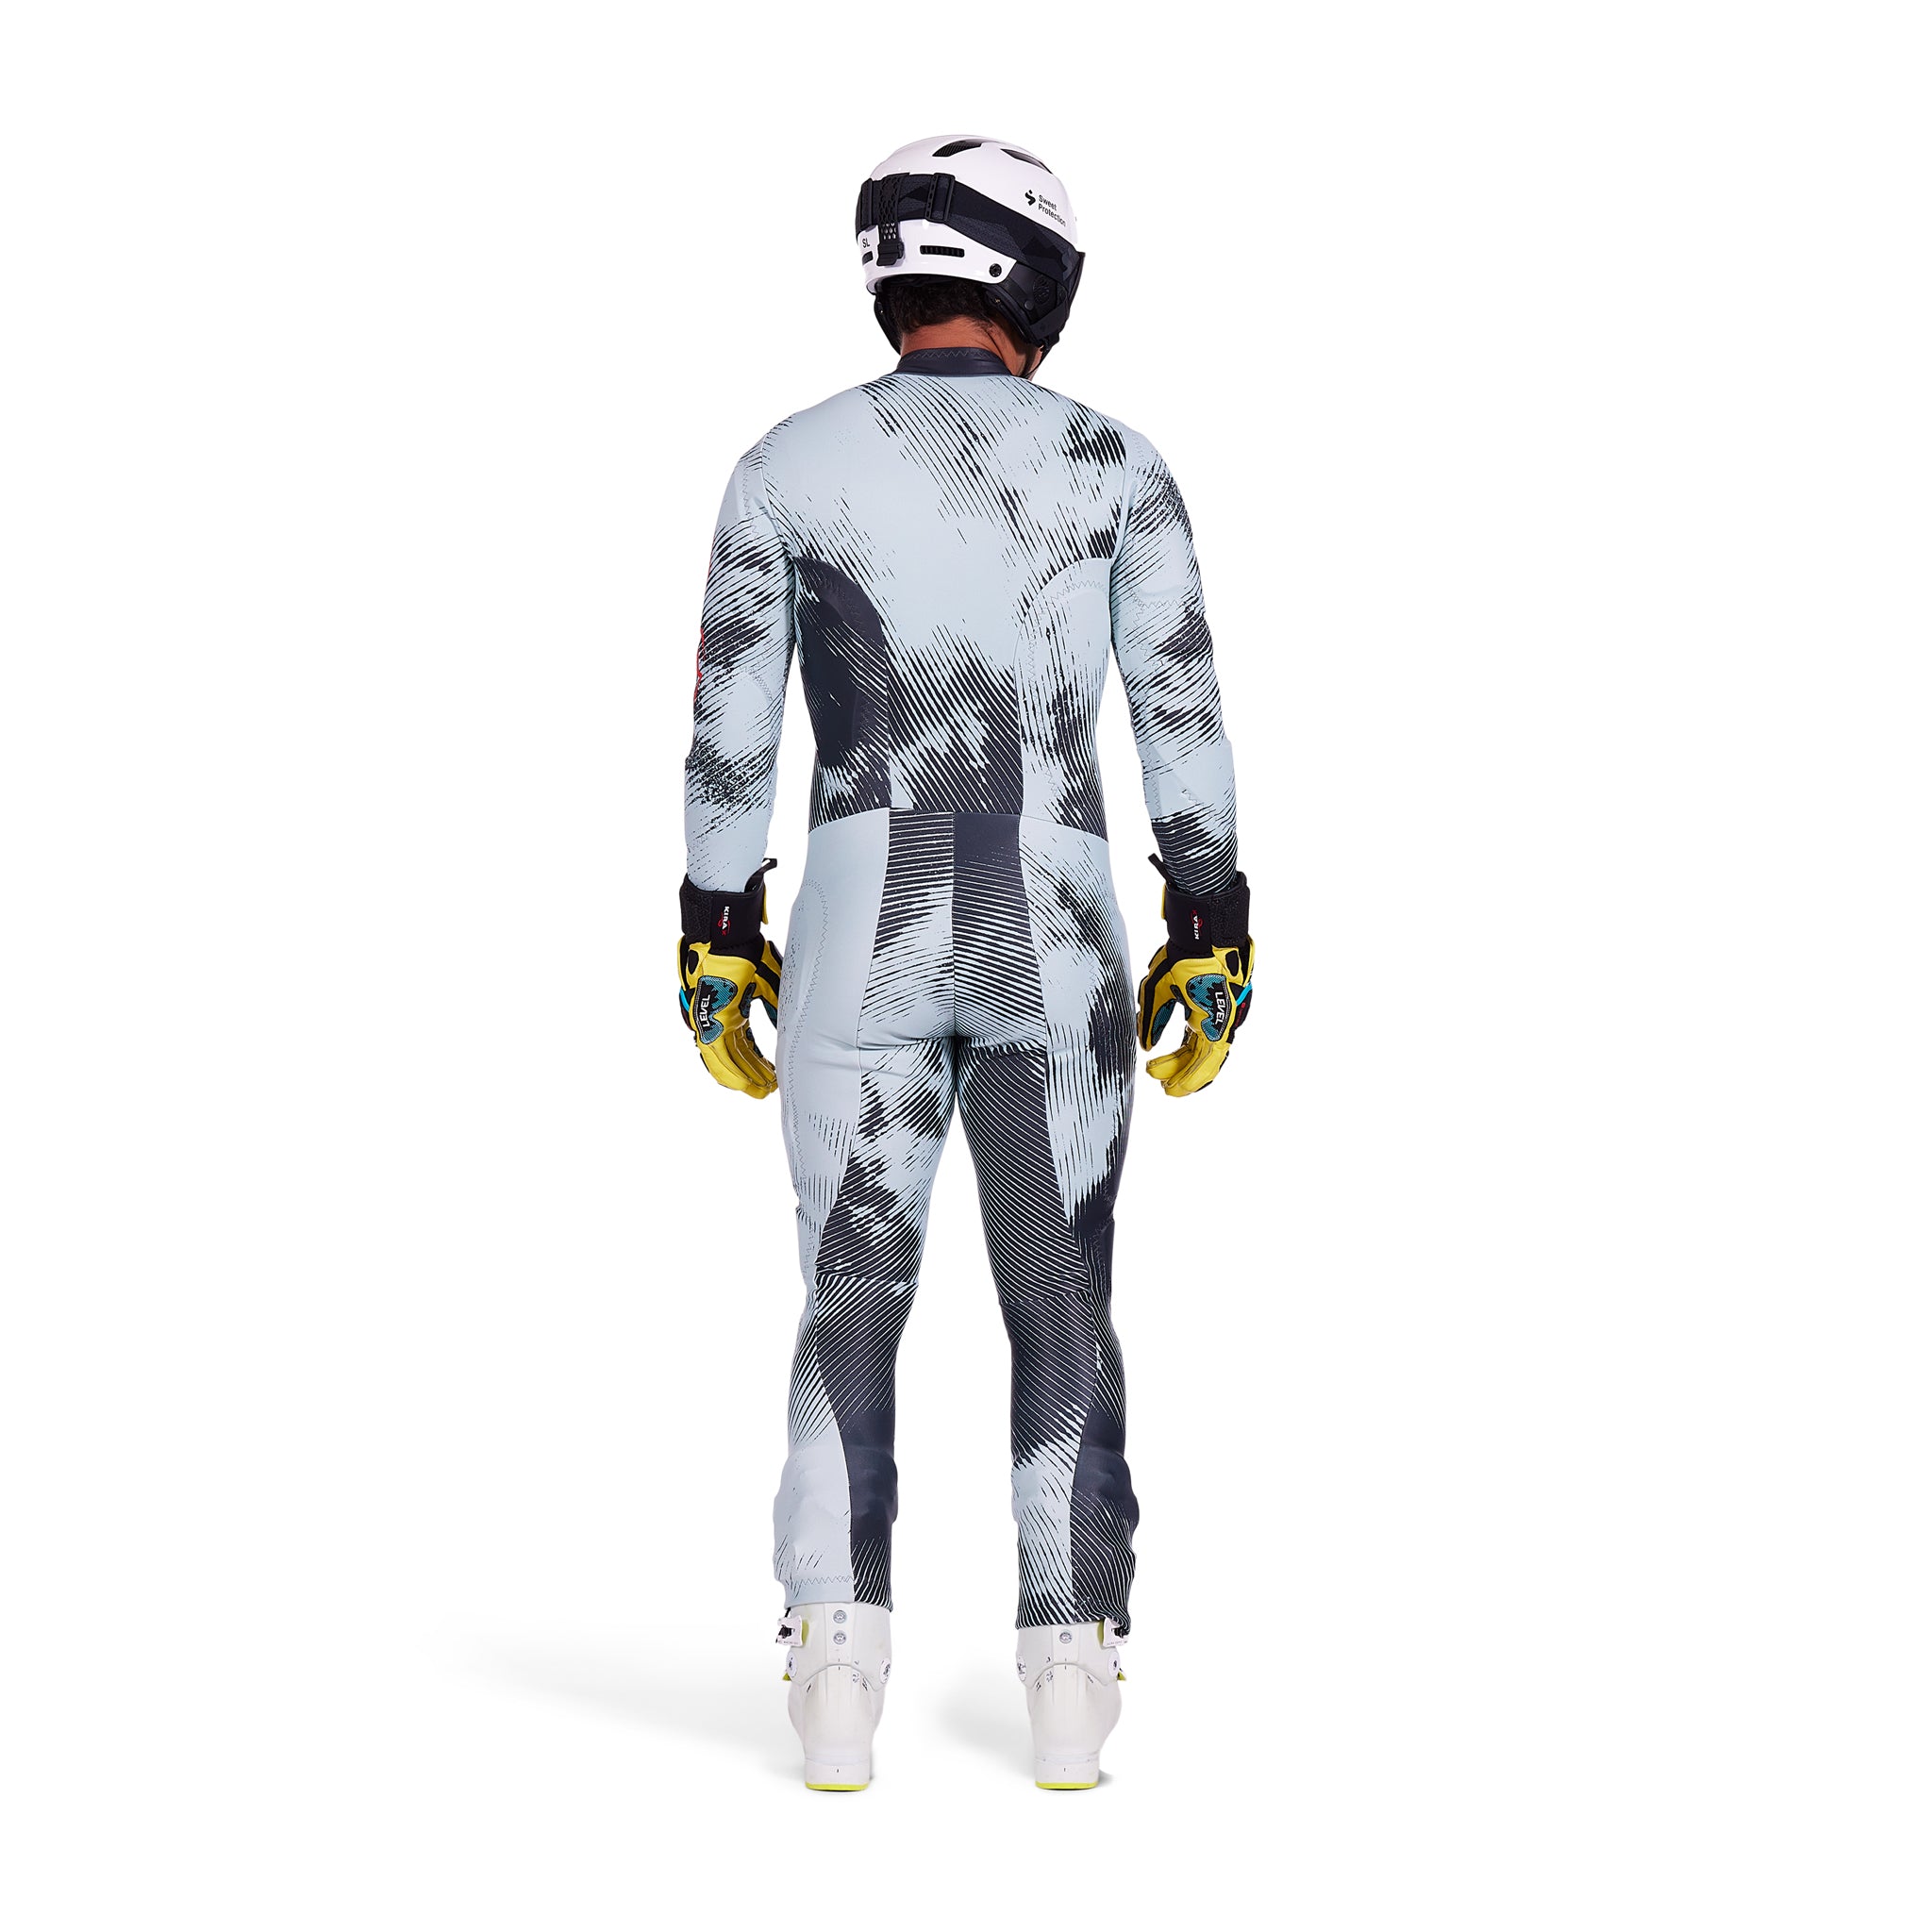 Spyder Women's Performance GS Race Suit - Volcano Vonn - Wintersport.tv |  Ski Fashion & Racing Shop